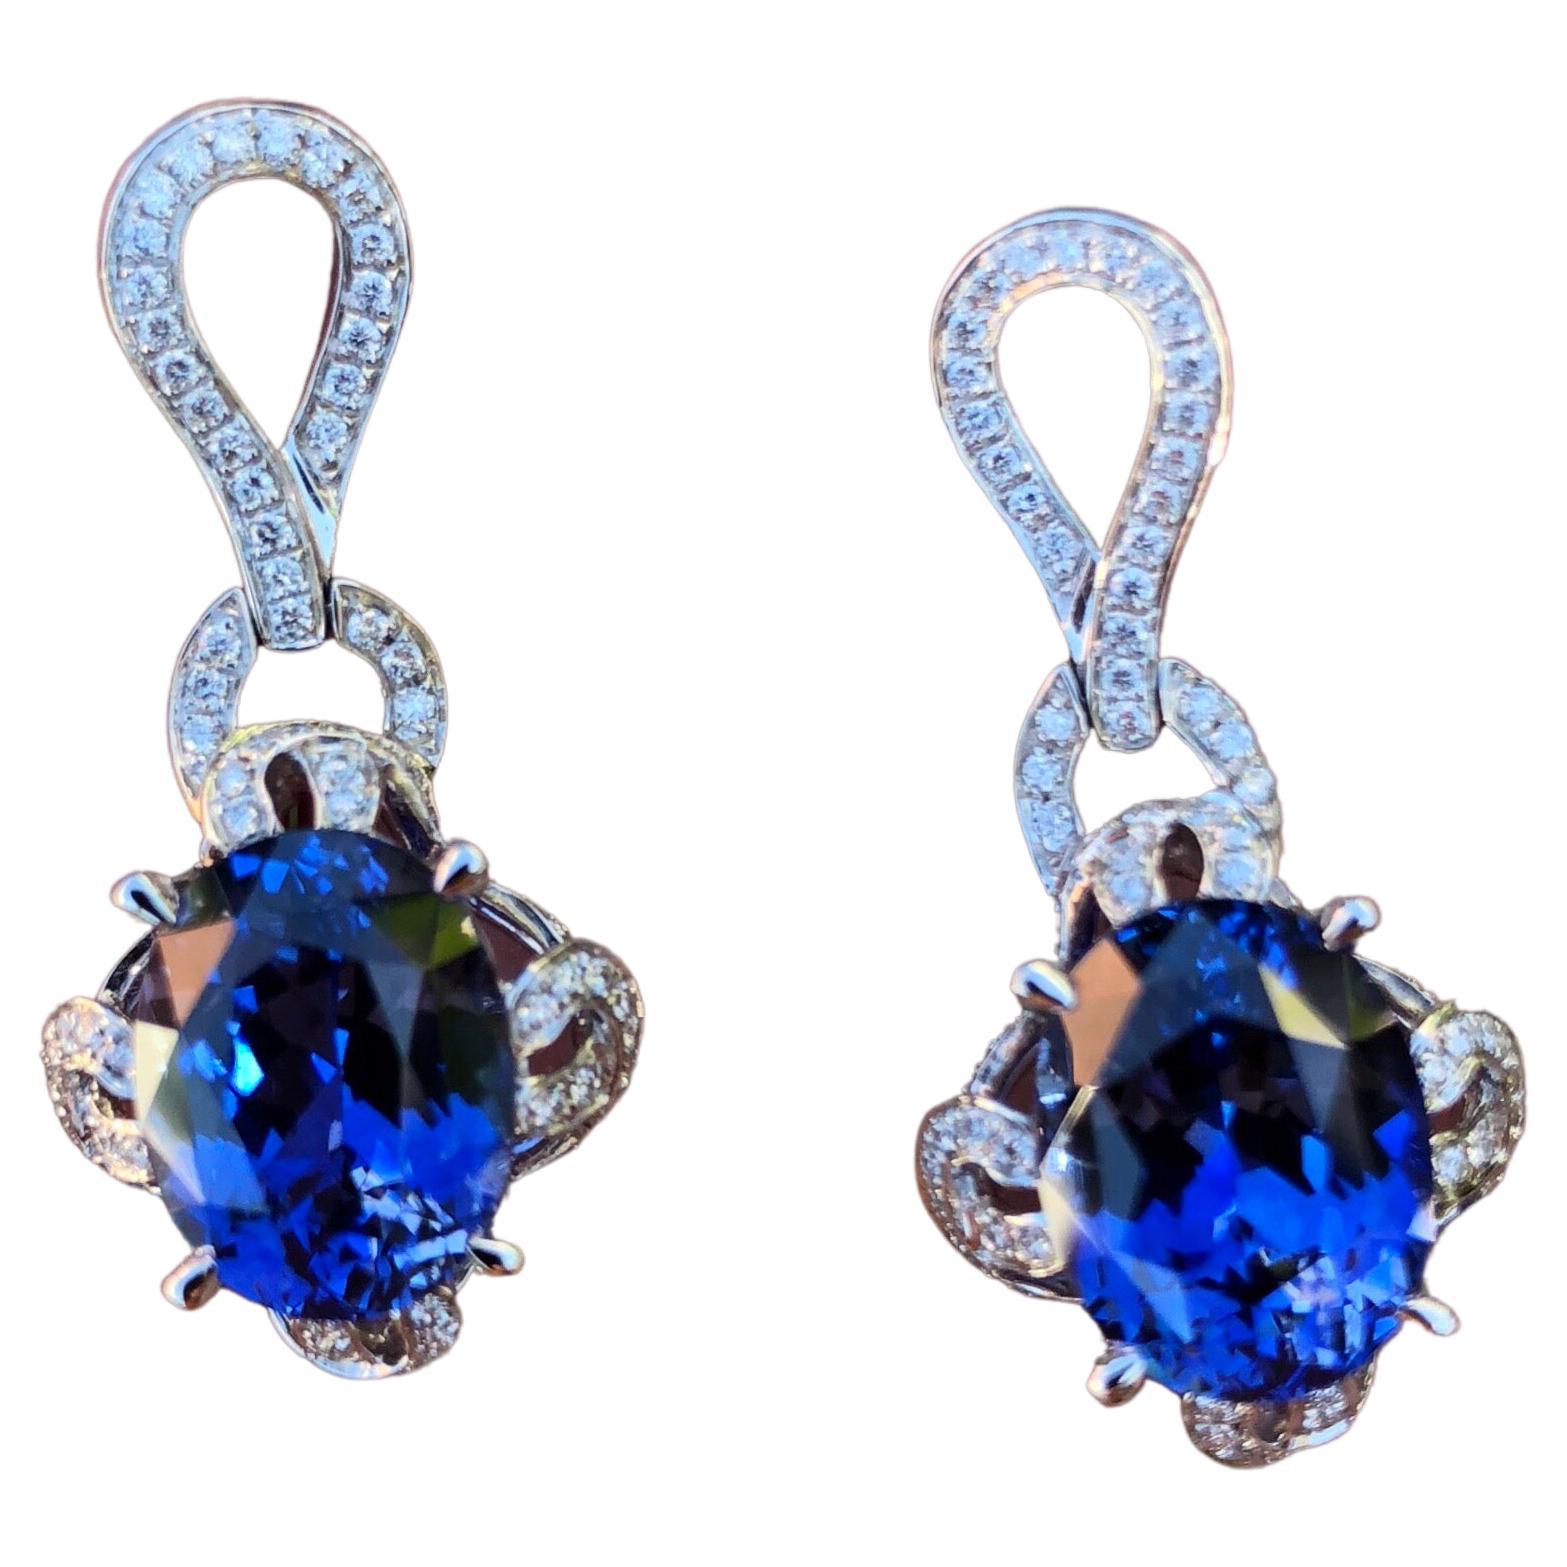 Oval Cut Sapphire Earrings 7.34 Carat Ovals For Sale